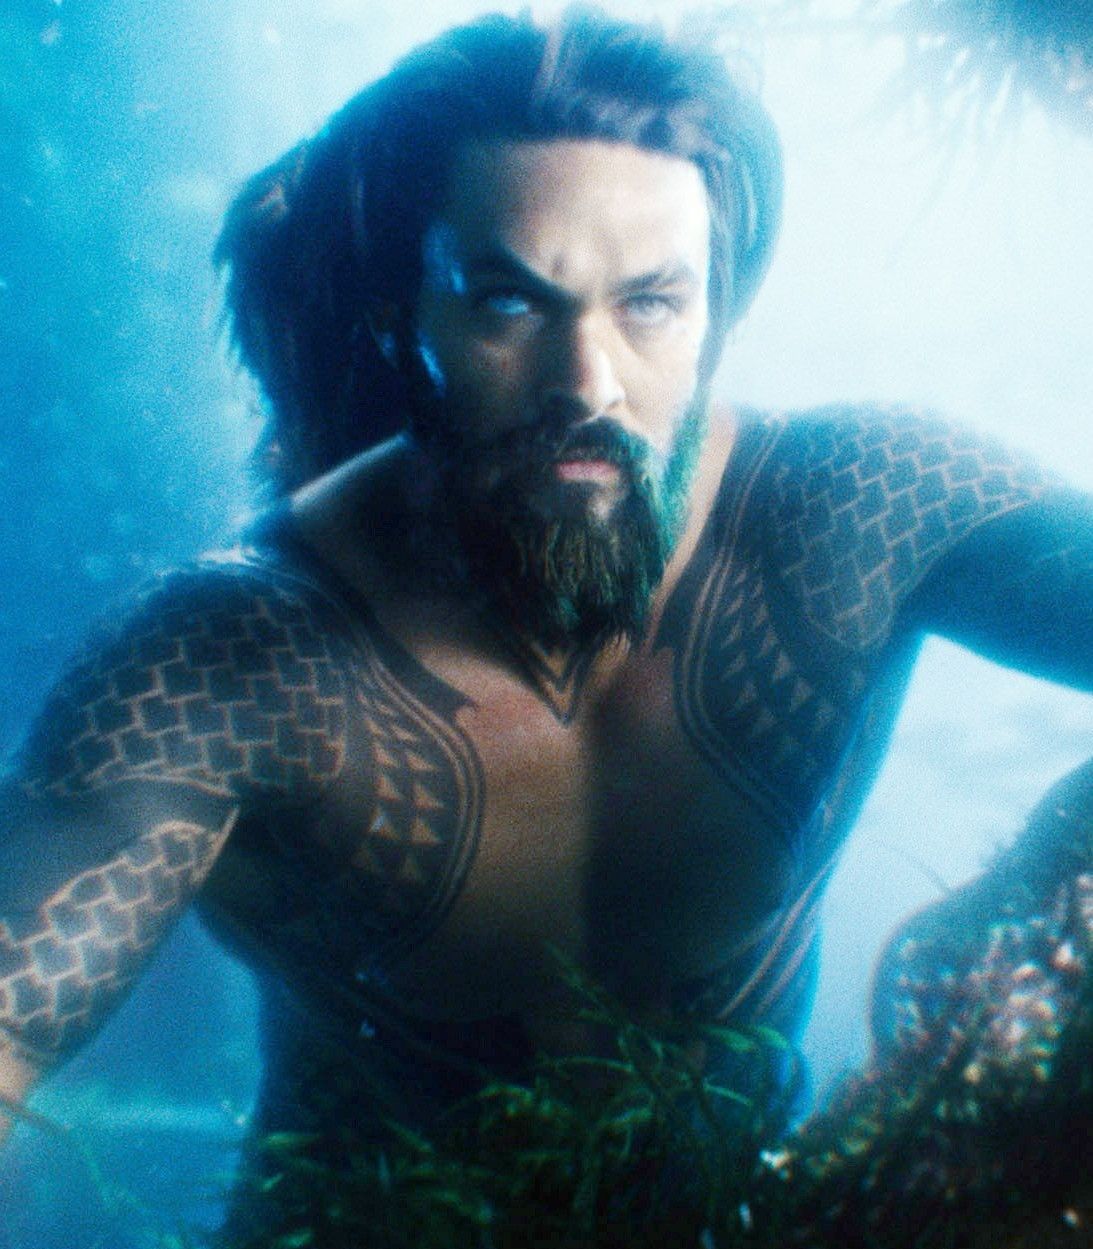 Aquaman (Jason Momoa) from Justice League